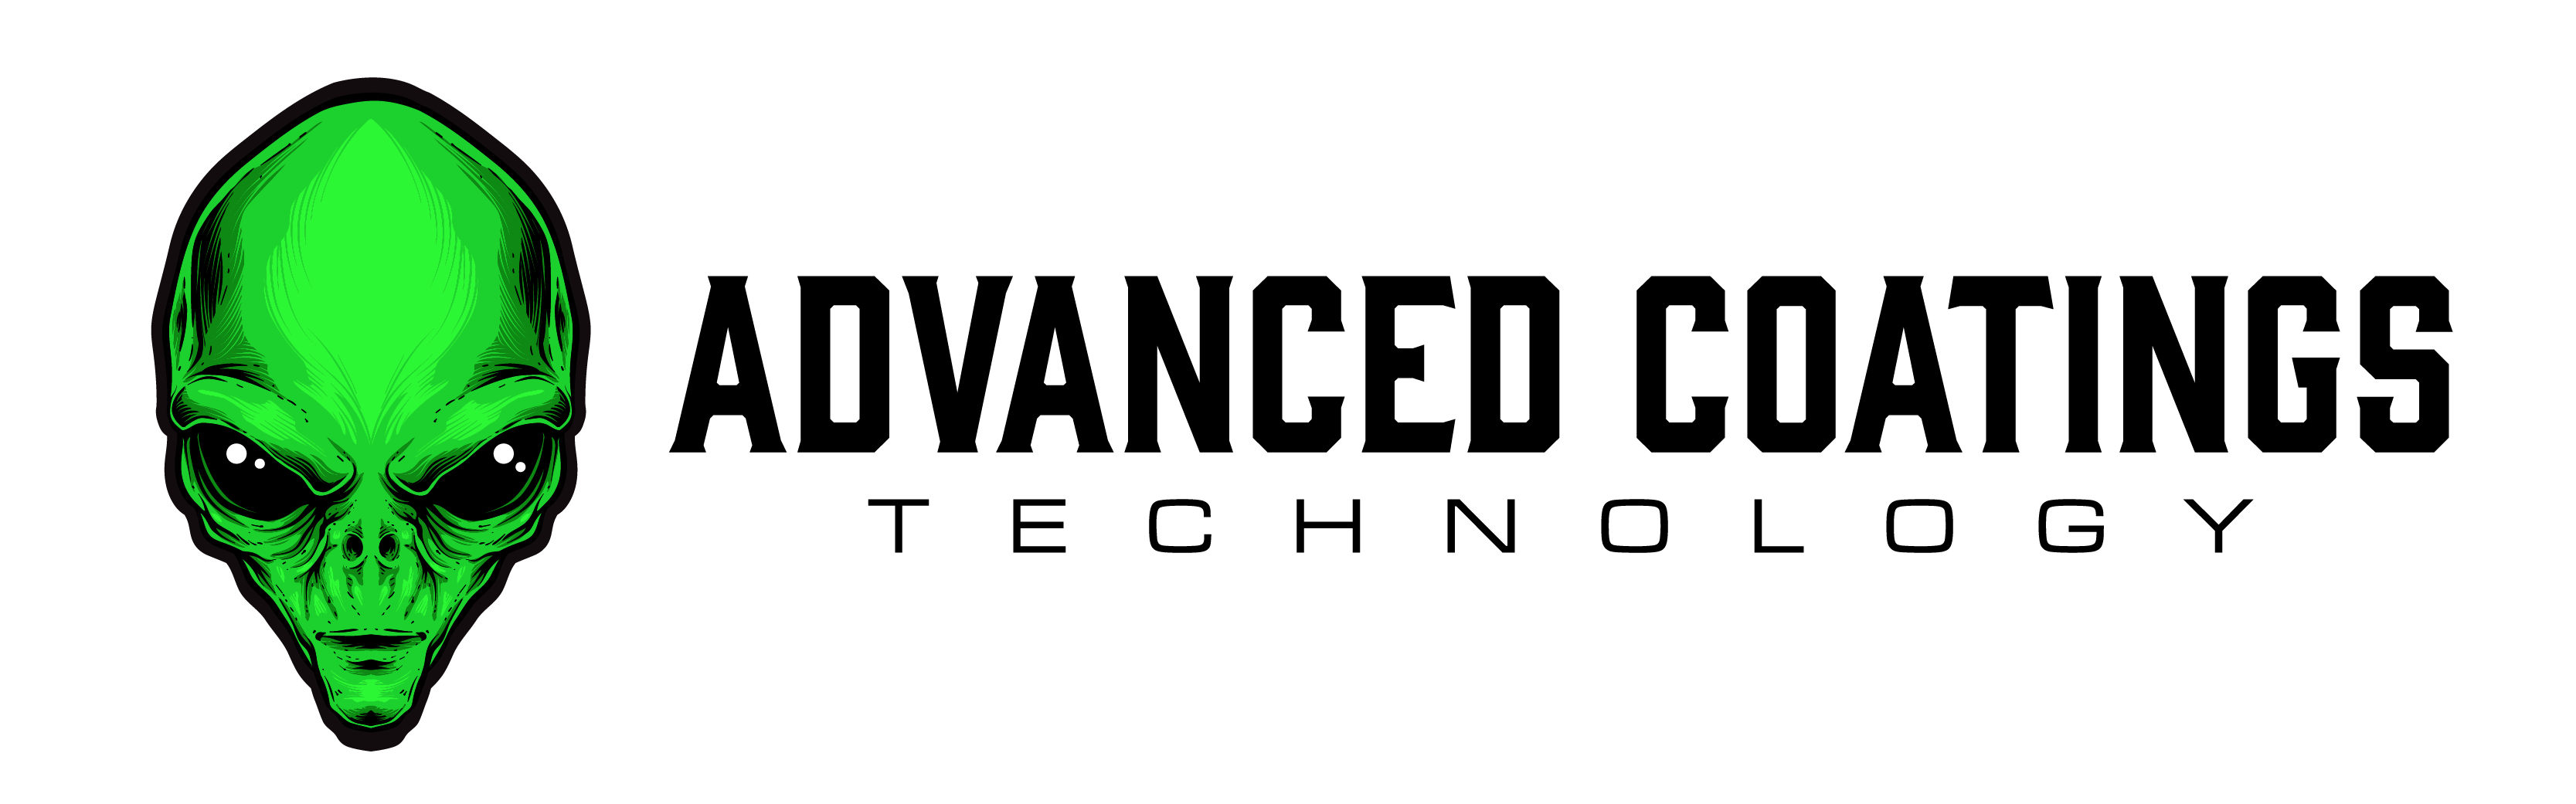 Advanced Coatings Technology, LLC Logo